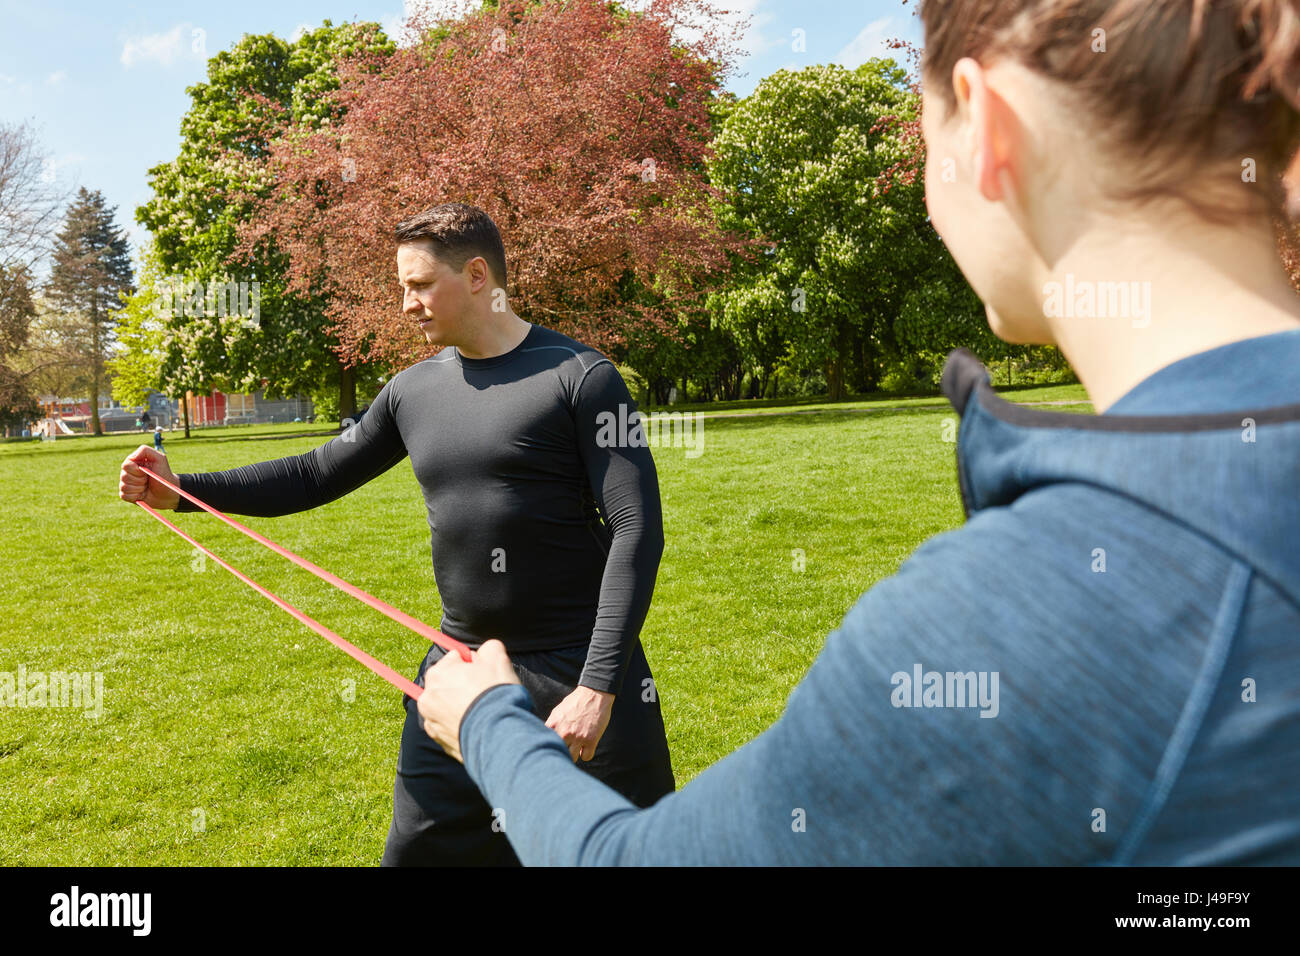 Mann-Fitness-Training mit Gummiband im park Stockfoto